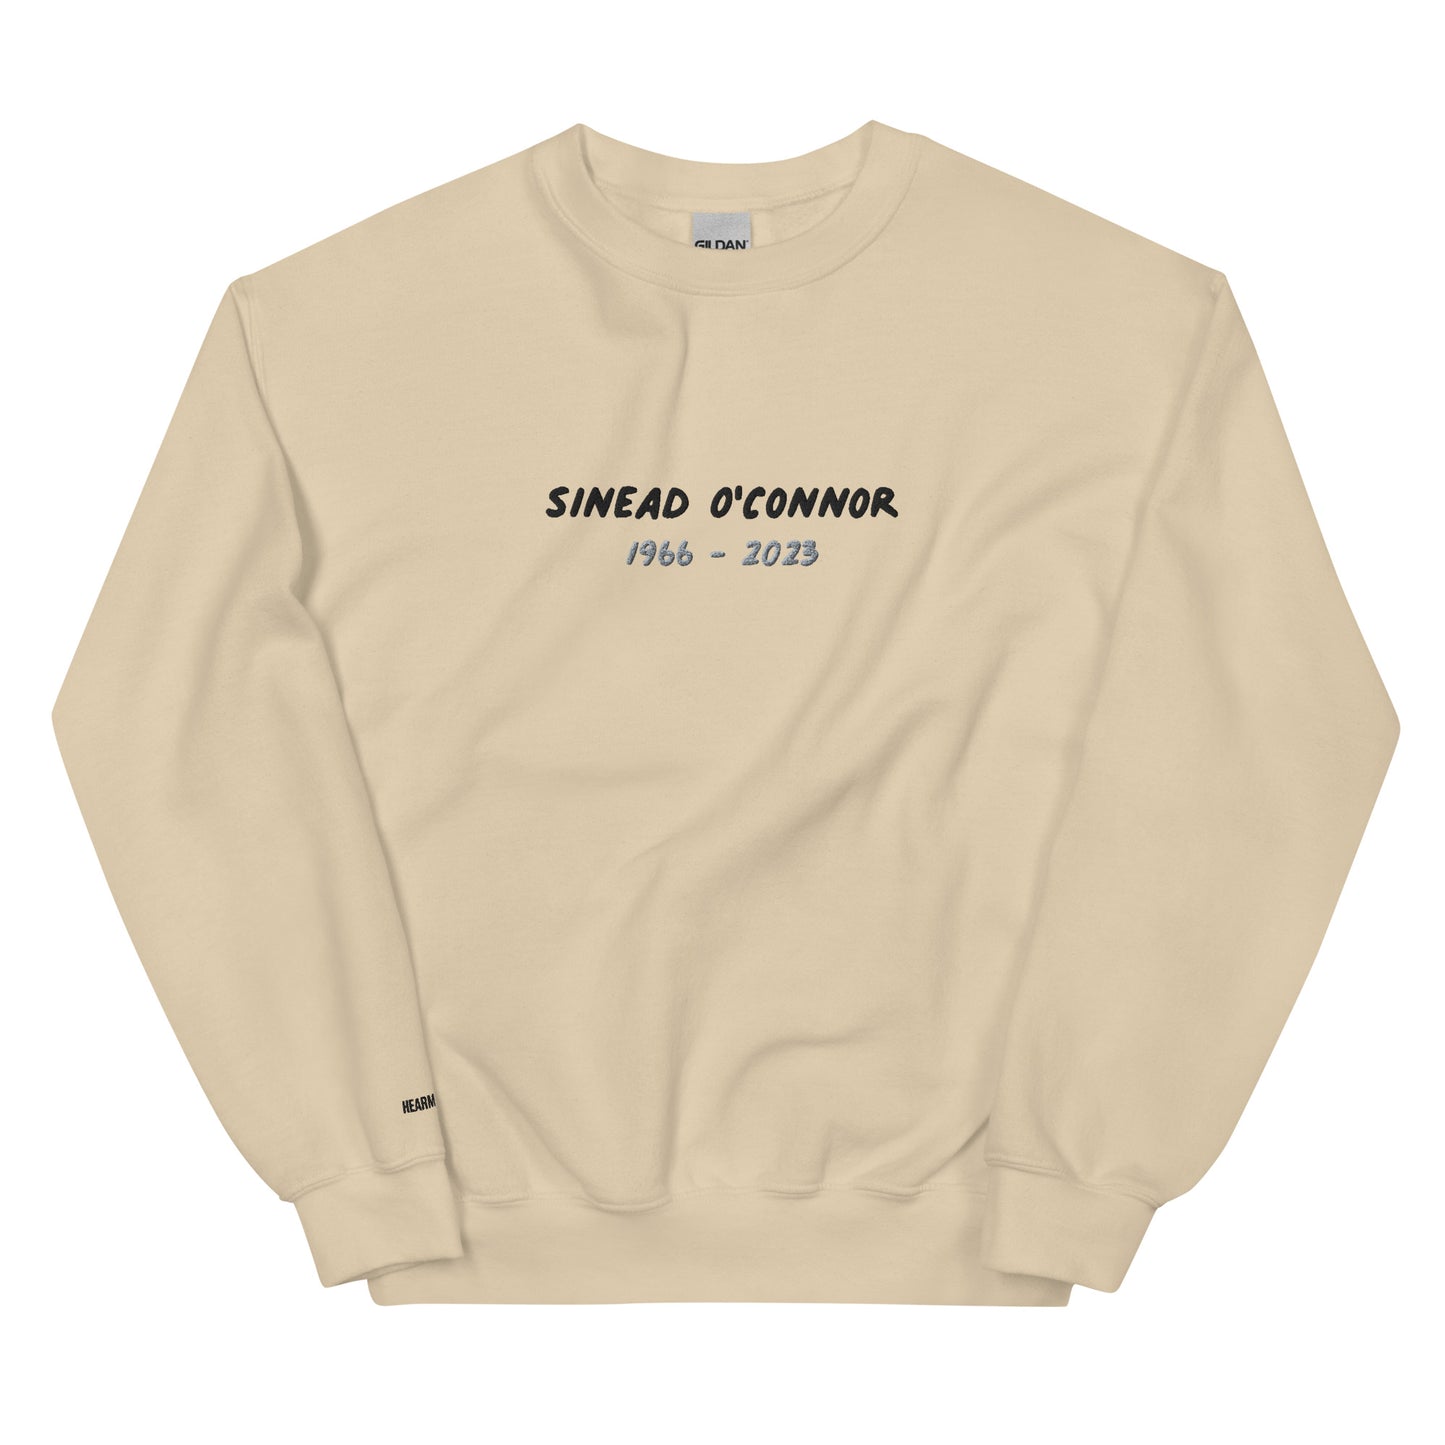 Sinead O'Connor 1966 - 2023 Embroidered Unisex Sweatshirt